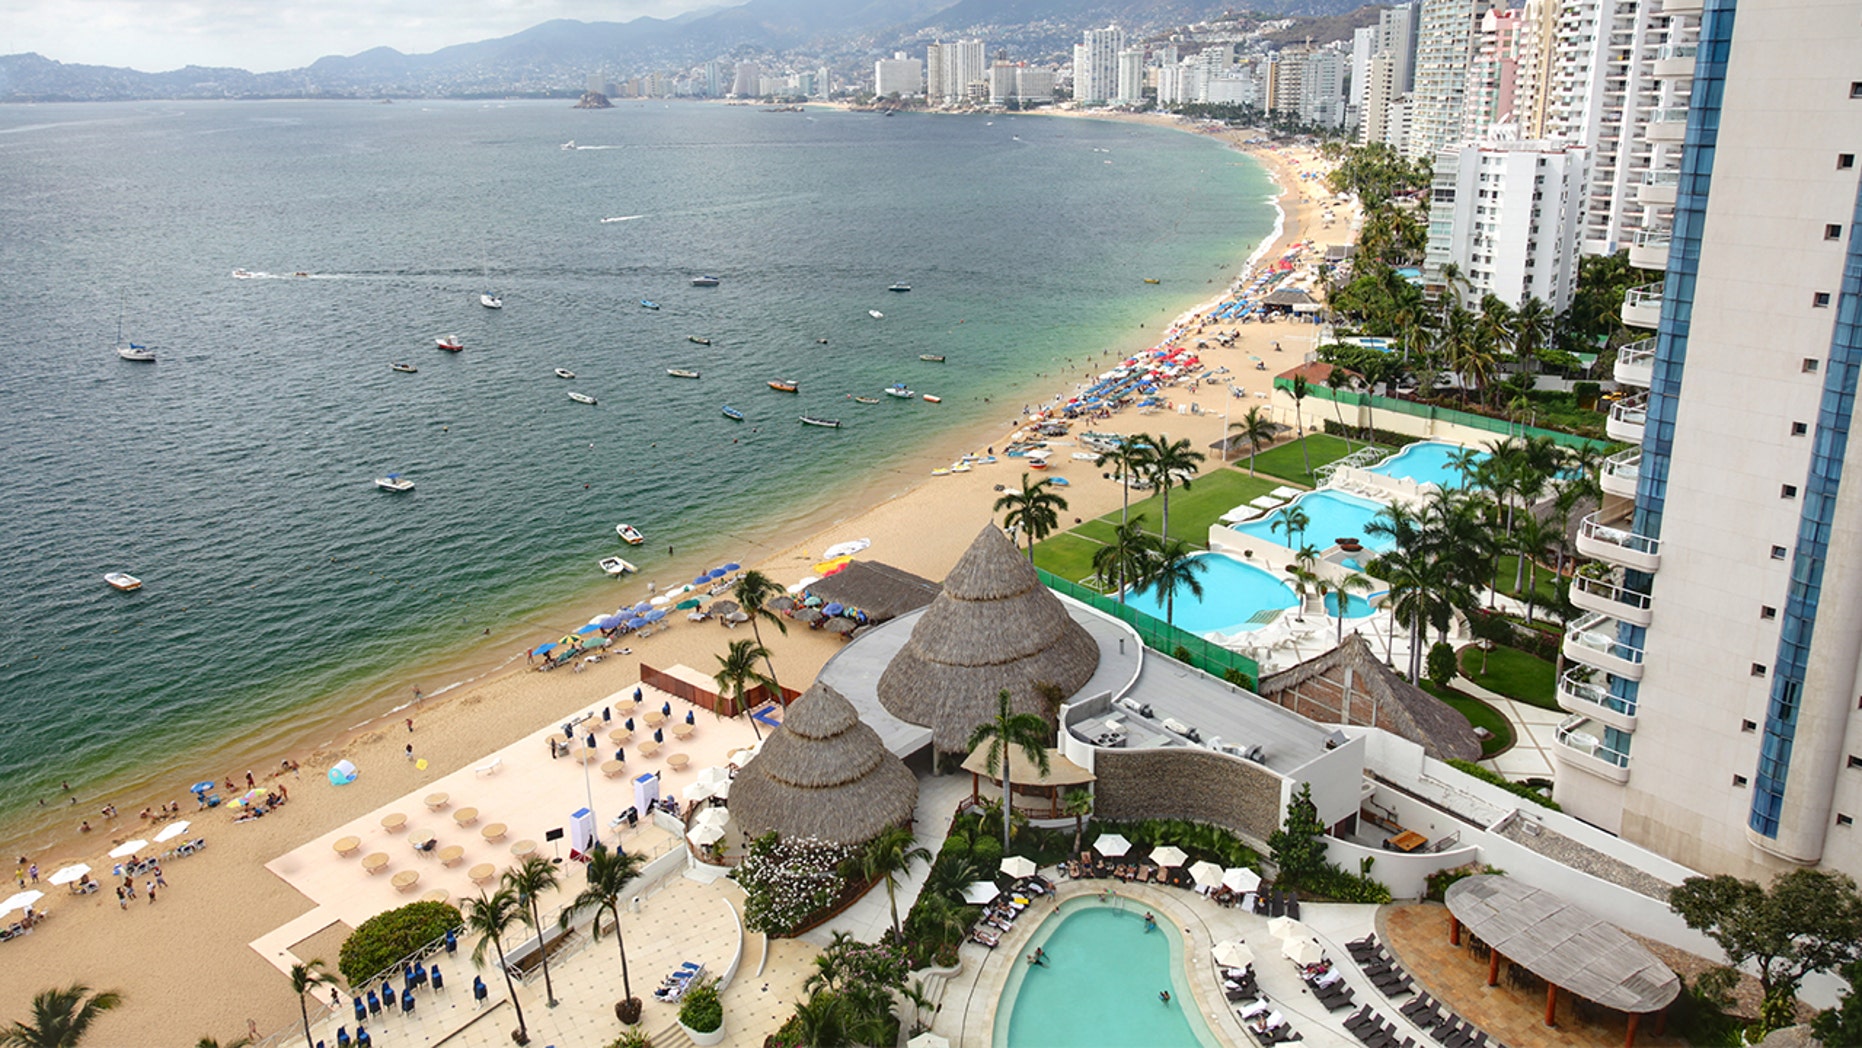 Acapulco, Mexico's 'murder capital,' sees steady tourism despite